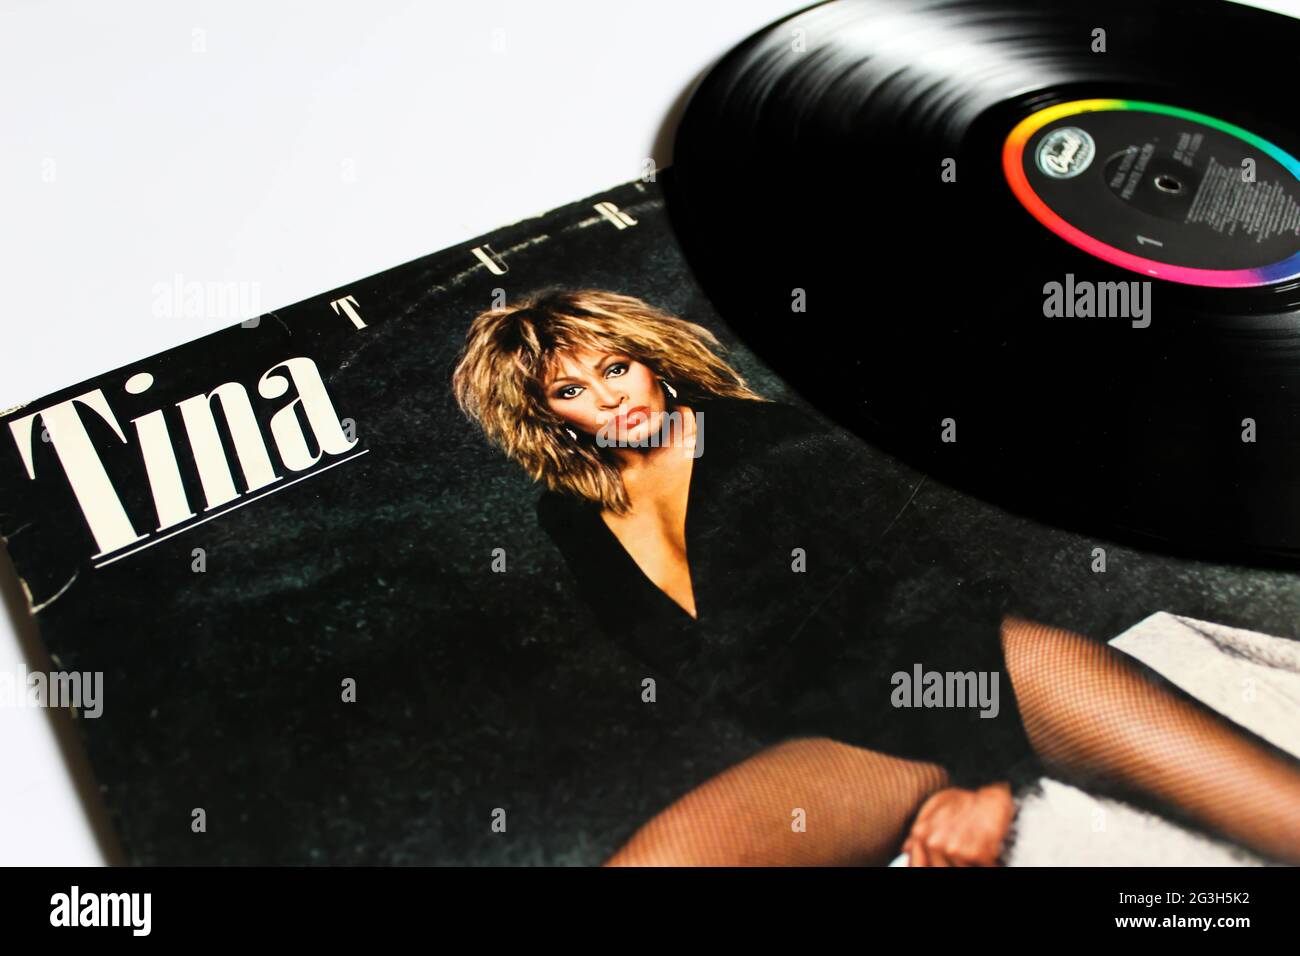 Pop, rock and RnB artist, Tina Turner music album on vinyl record LP disc. Titled: Private Dancer album cover Stock Photo